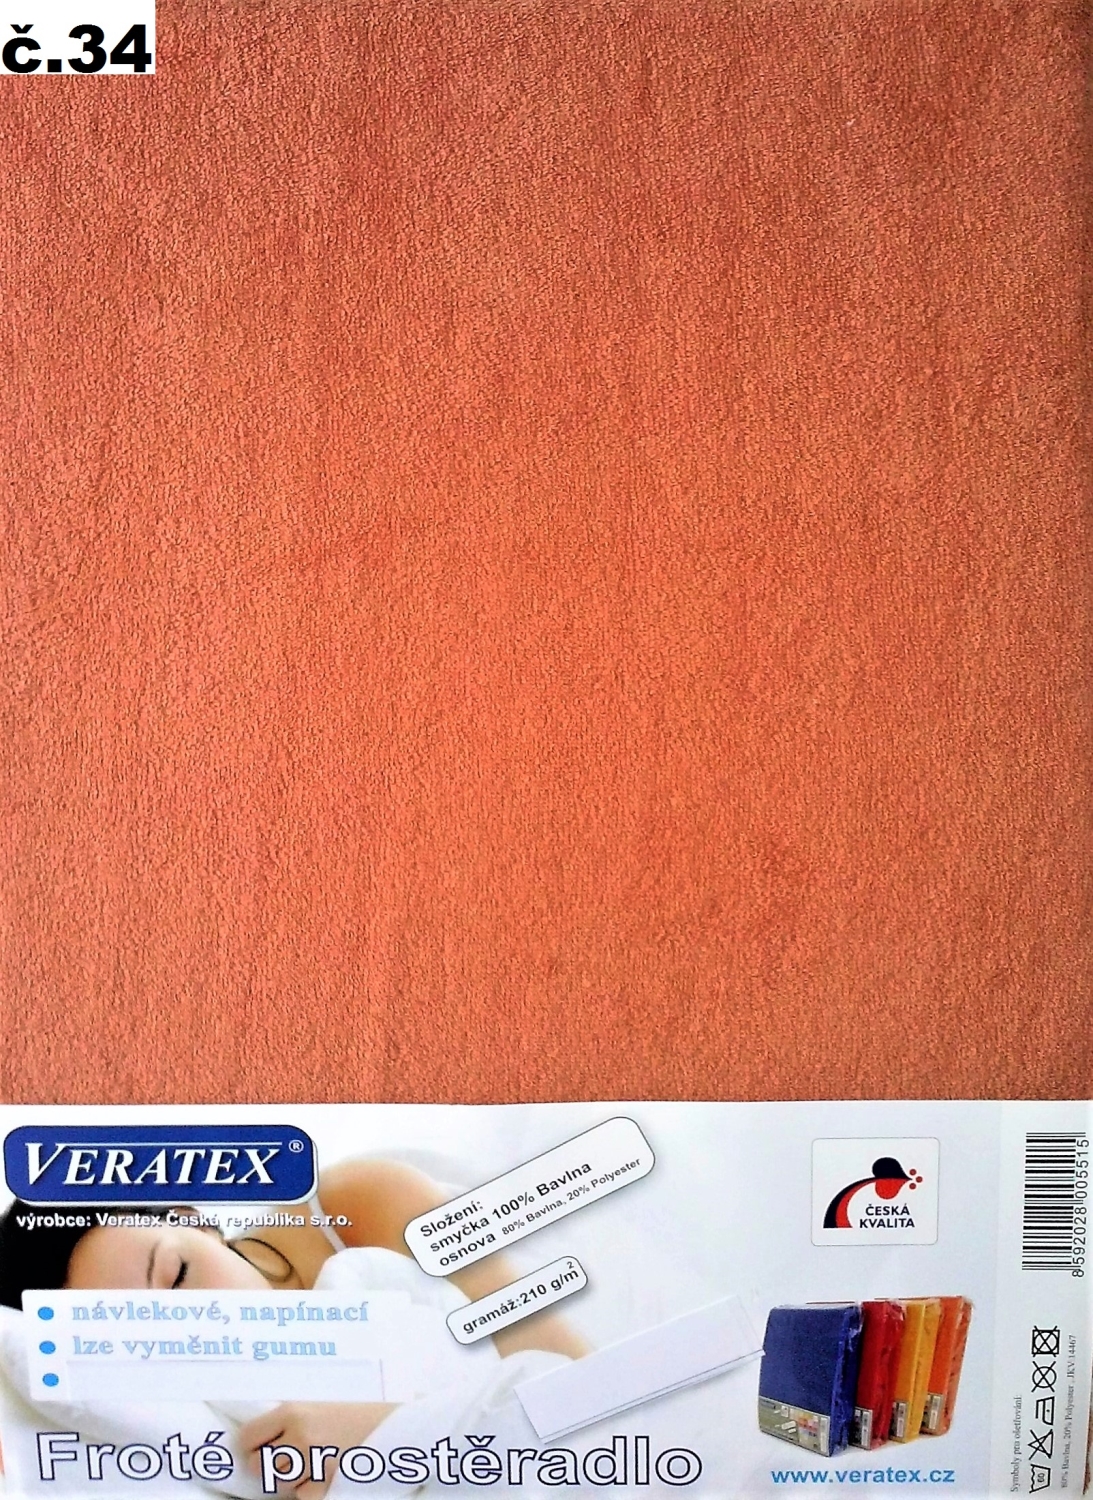 Veratex Froté prostěradlo 80 x 160 cm (č.34-sv.rezavá) 80 x 160 cm